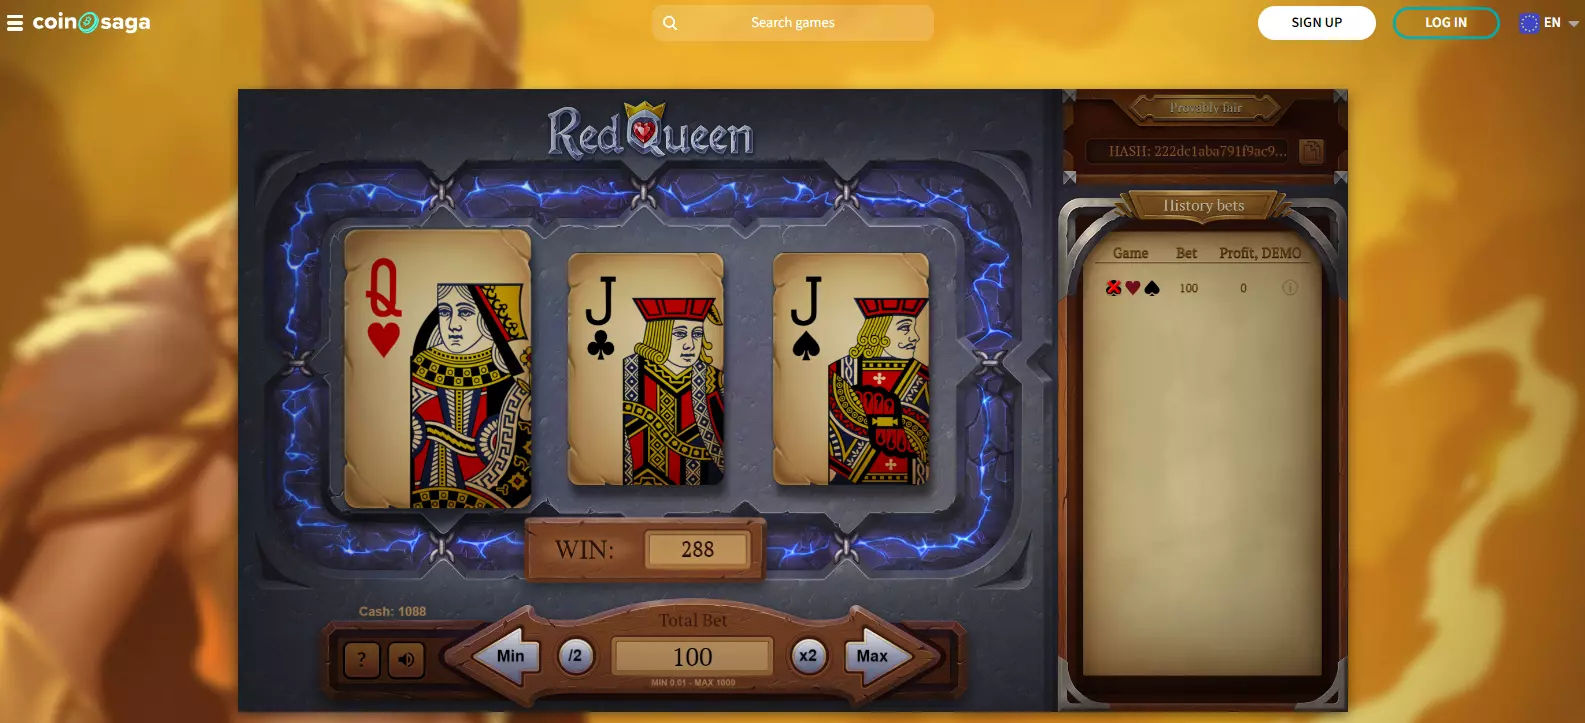 Red Queen Casino Game Win